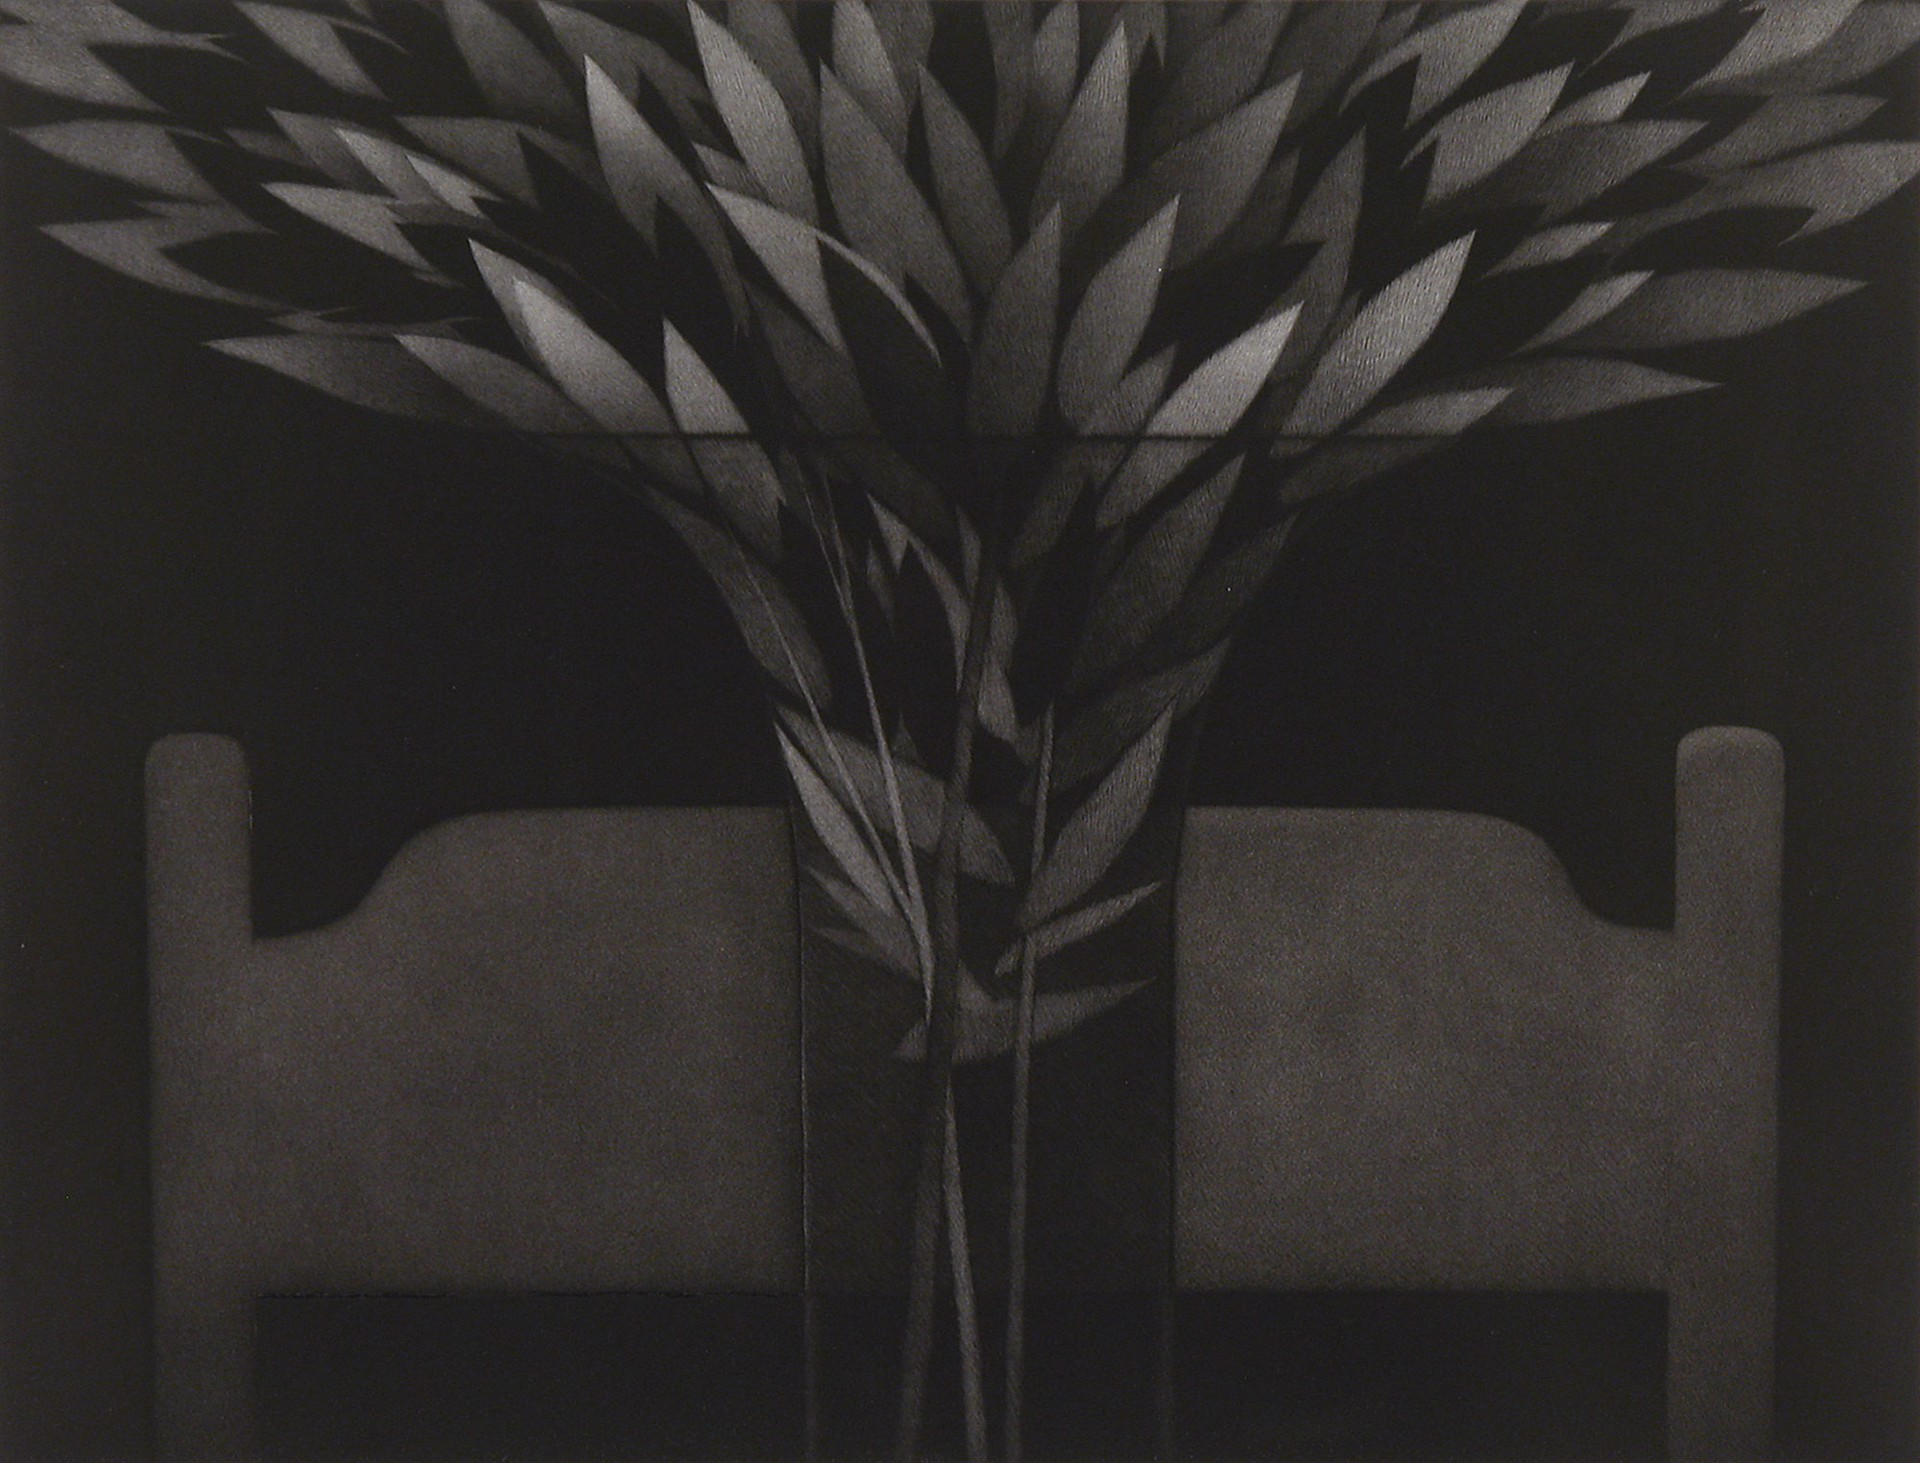 Chair & Leaves by Robert Kipniss